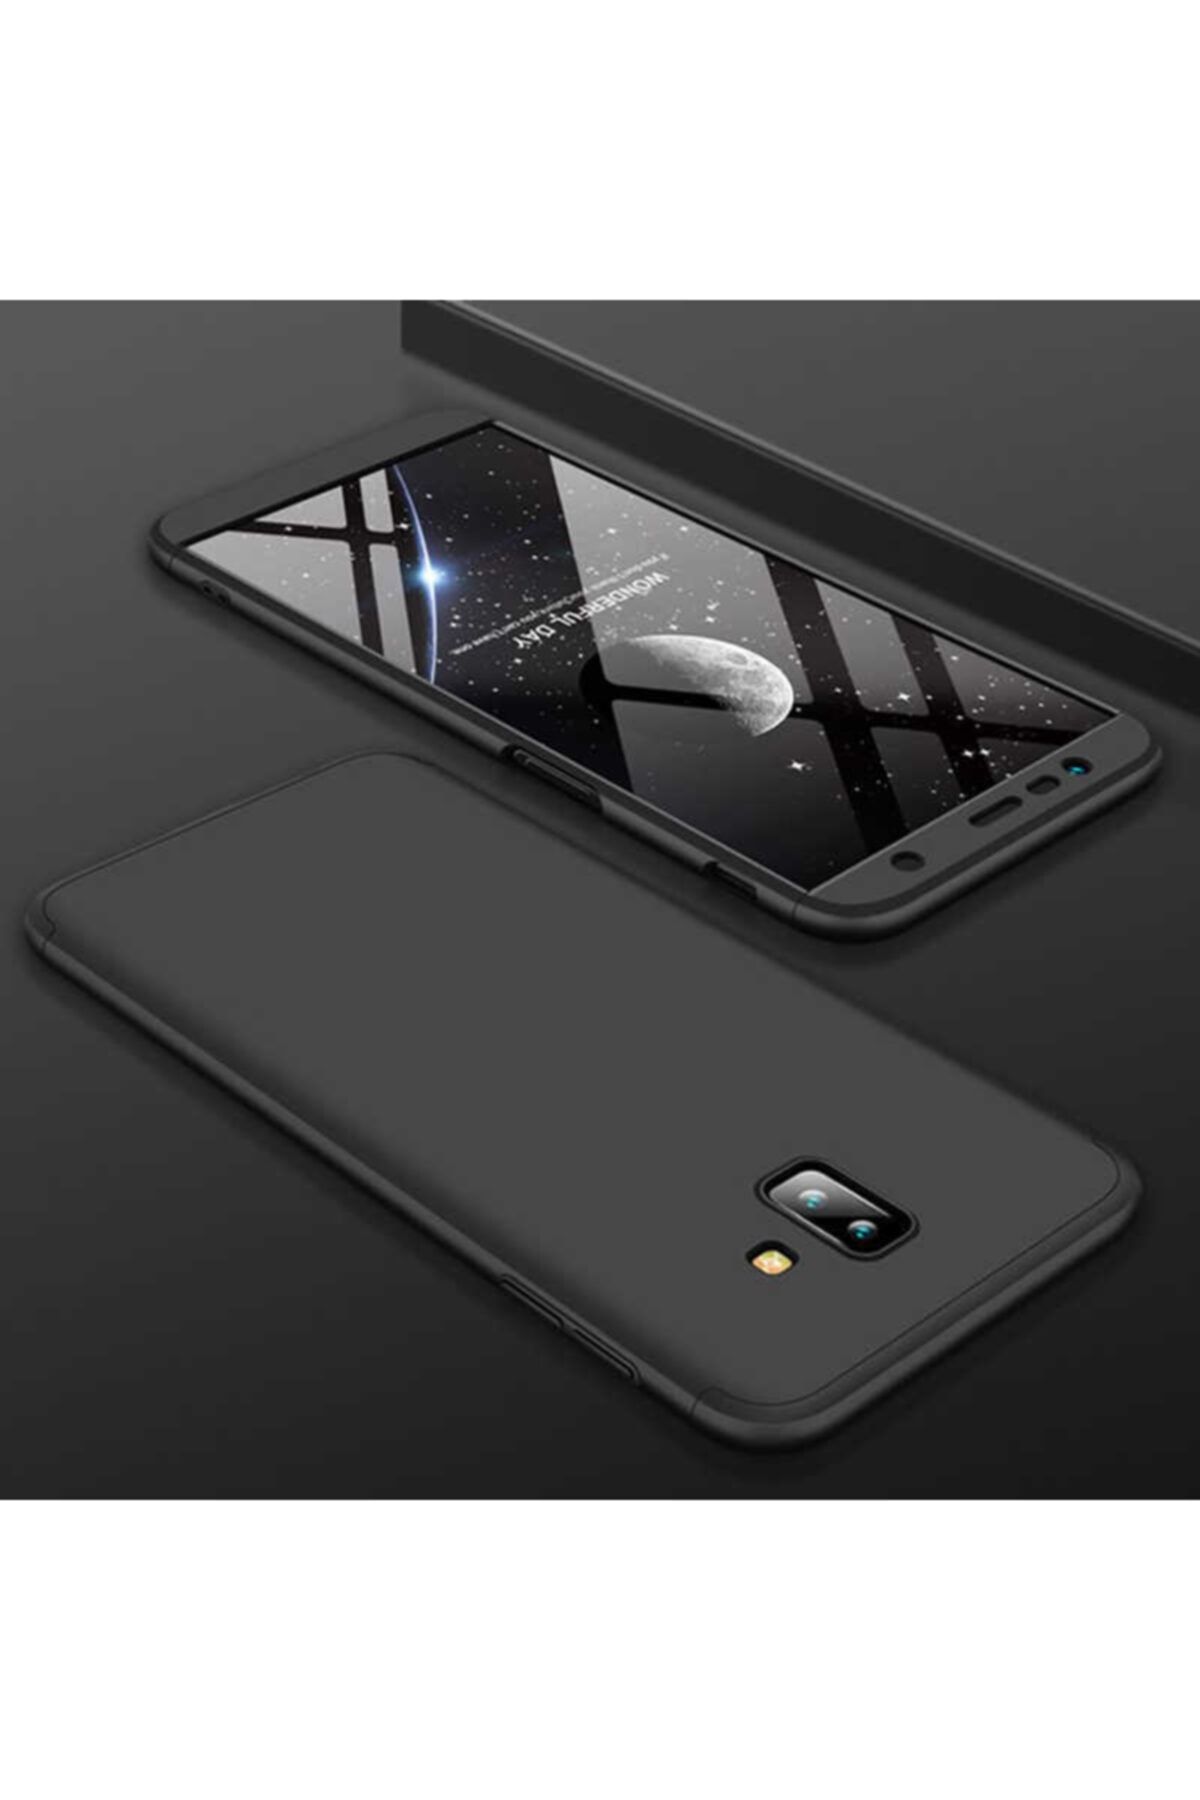 Fibaks Samsung Galaxy J6 Plus Kılıf 360 Tam Koruma Ön Ve Arka Sert Mika Kapak Orjinal Ays Gkk Kapak